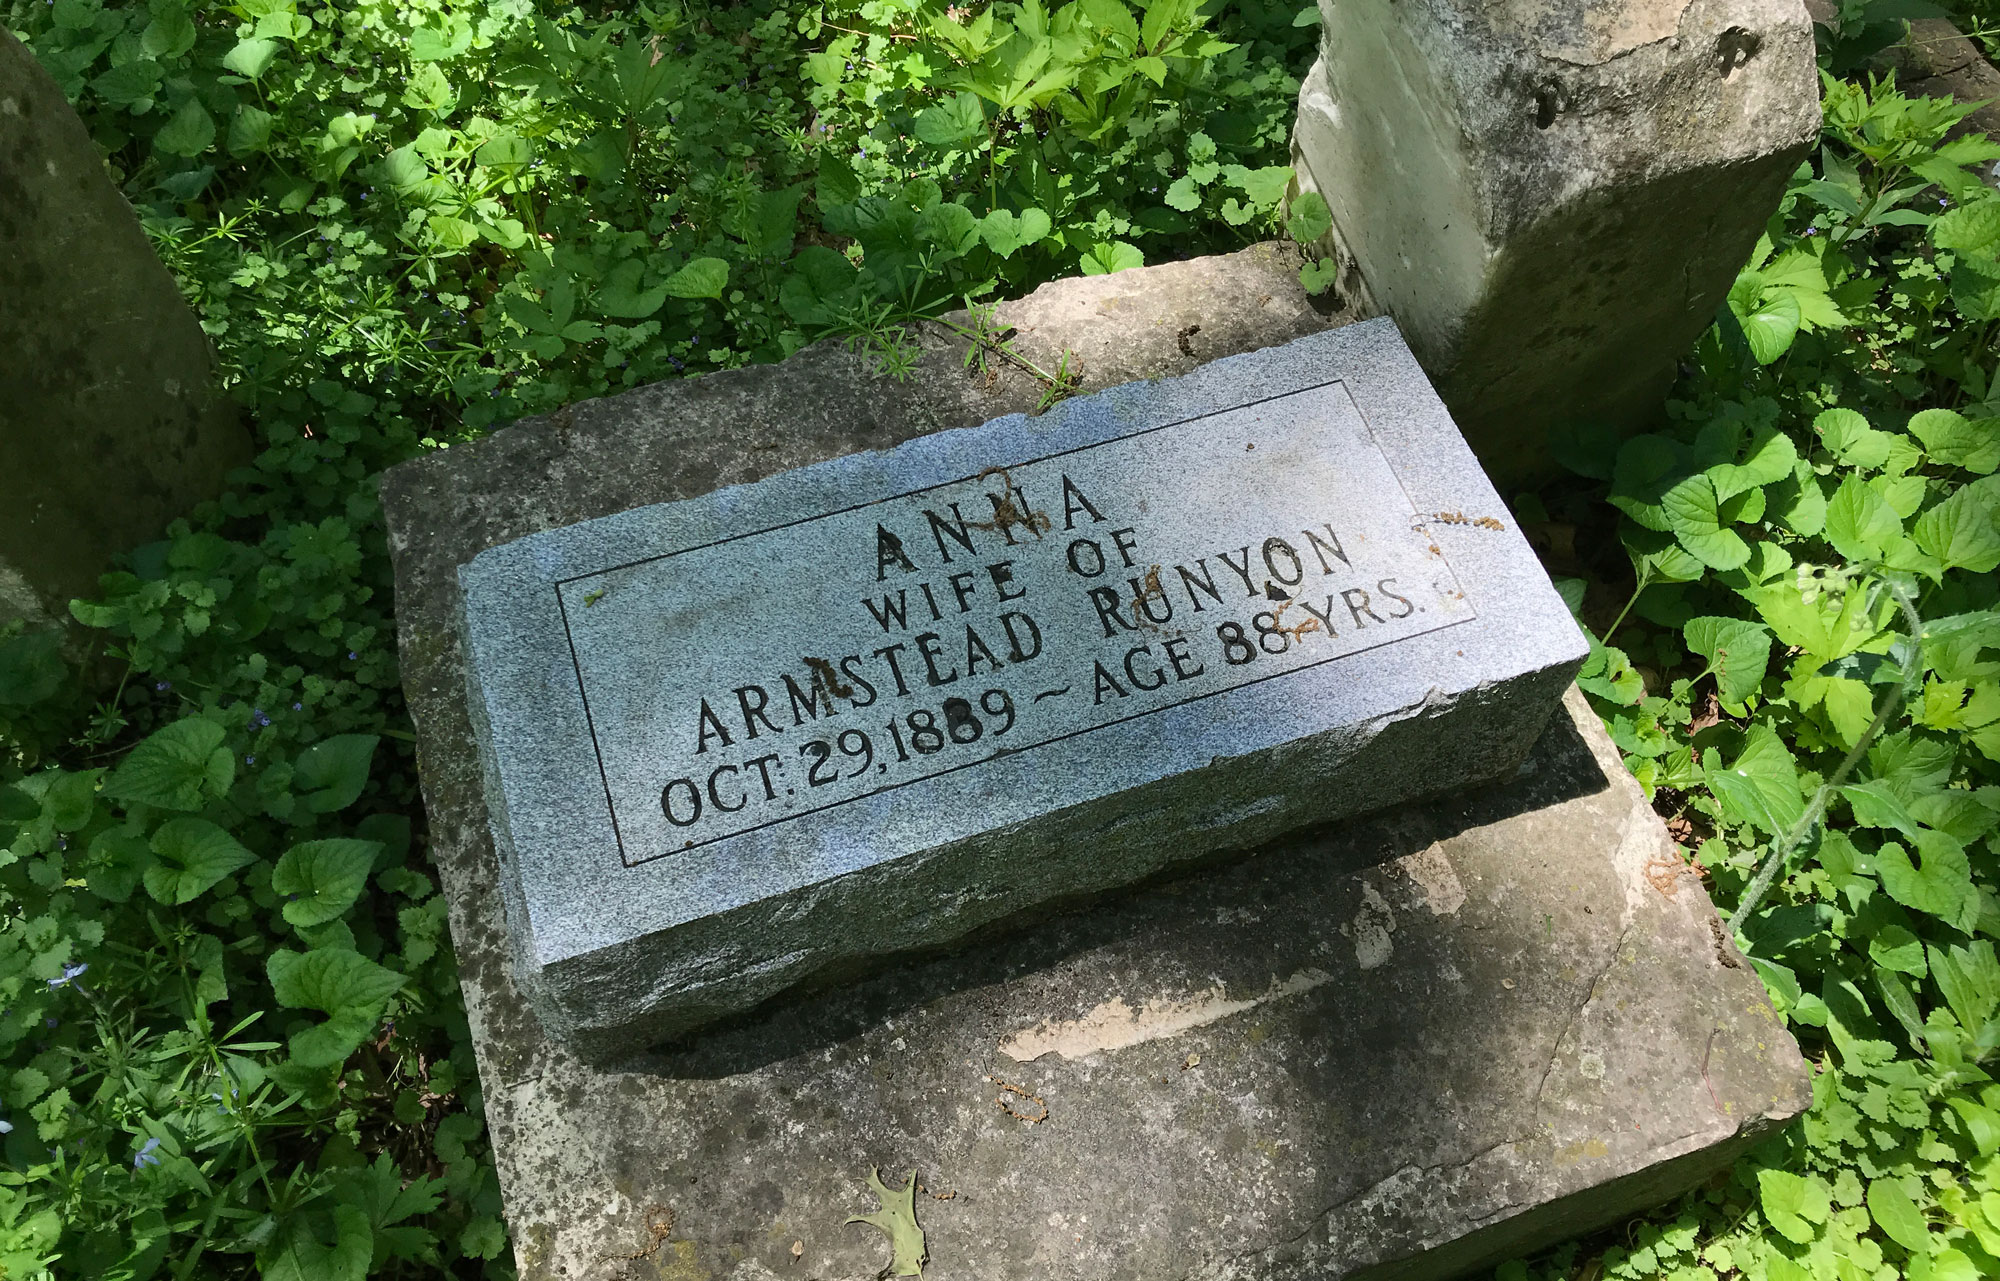 Close-up of a gravestone.